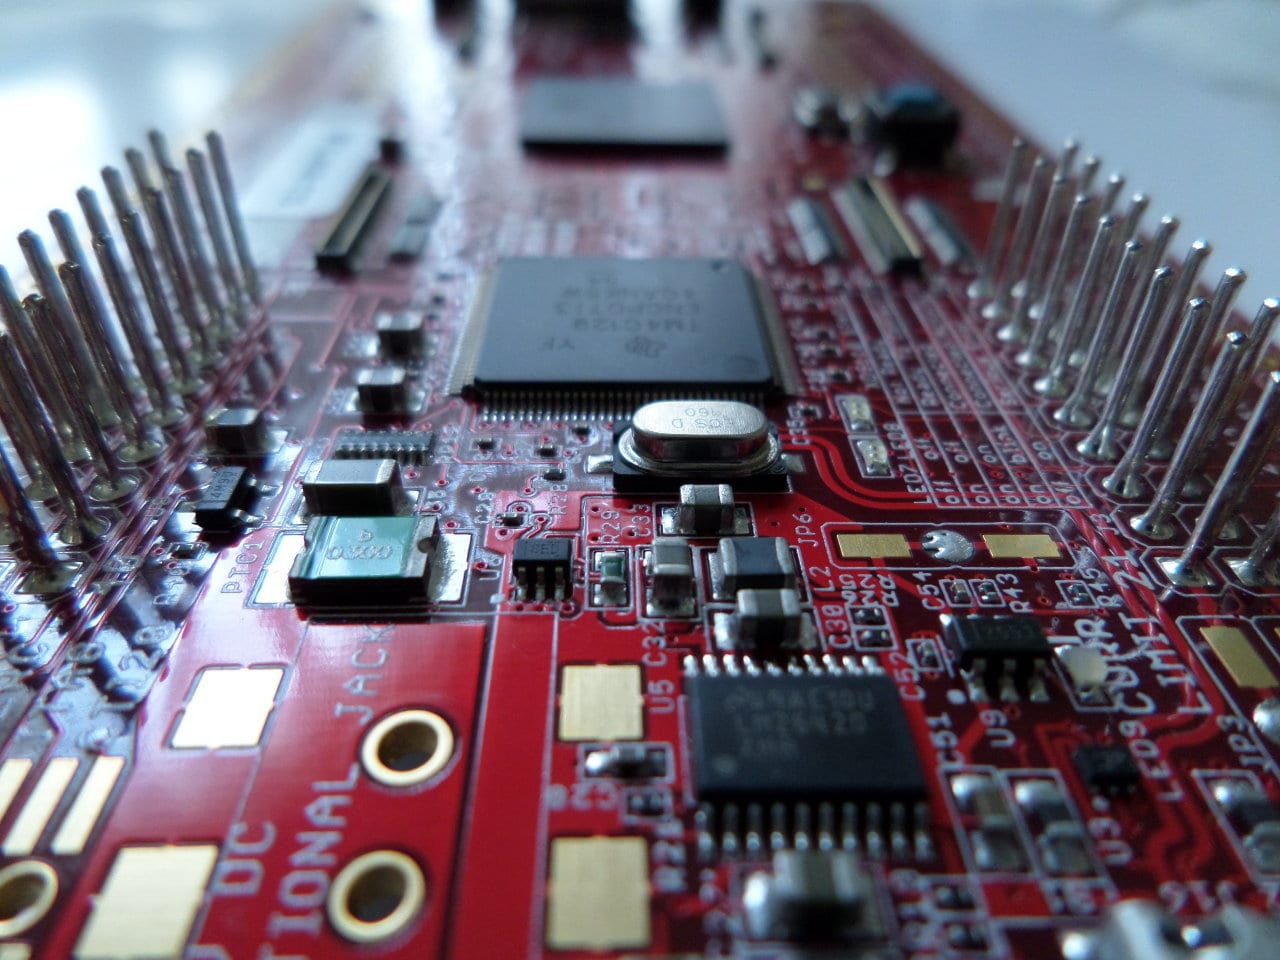 Texas Instruments Launchpad RM57L microcontroller kit.